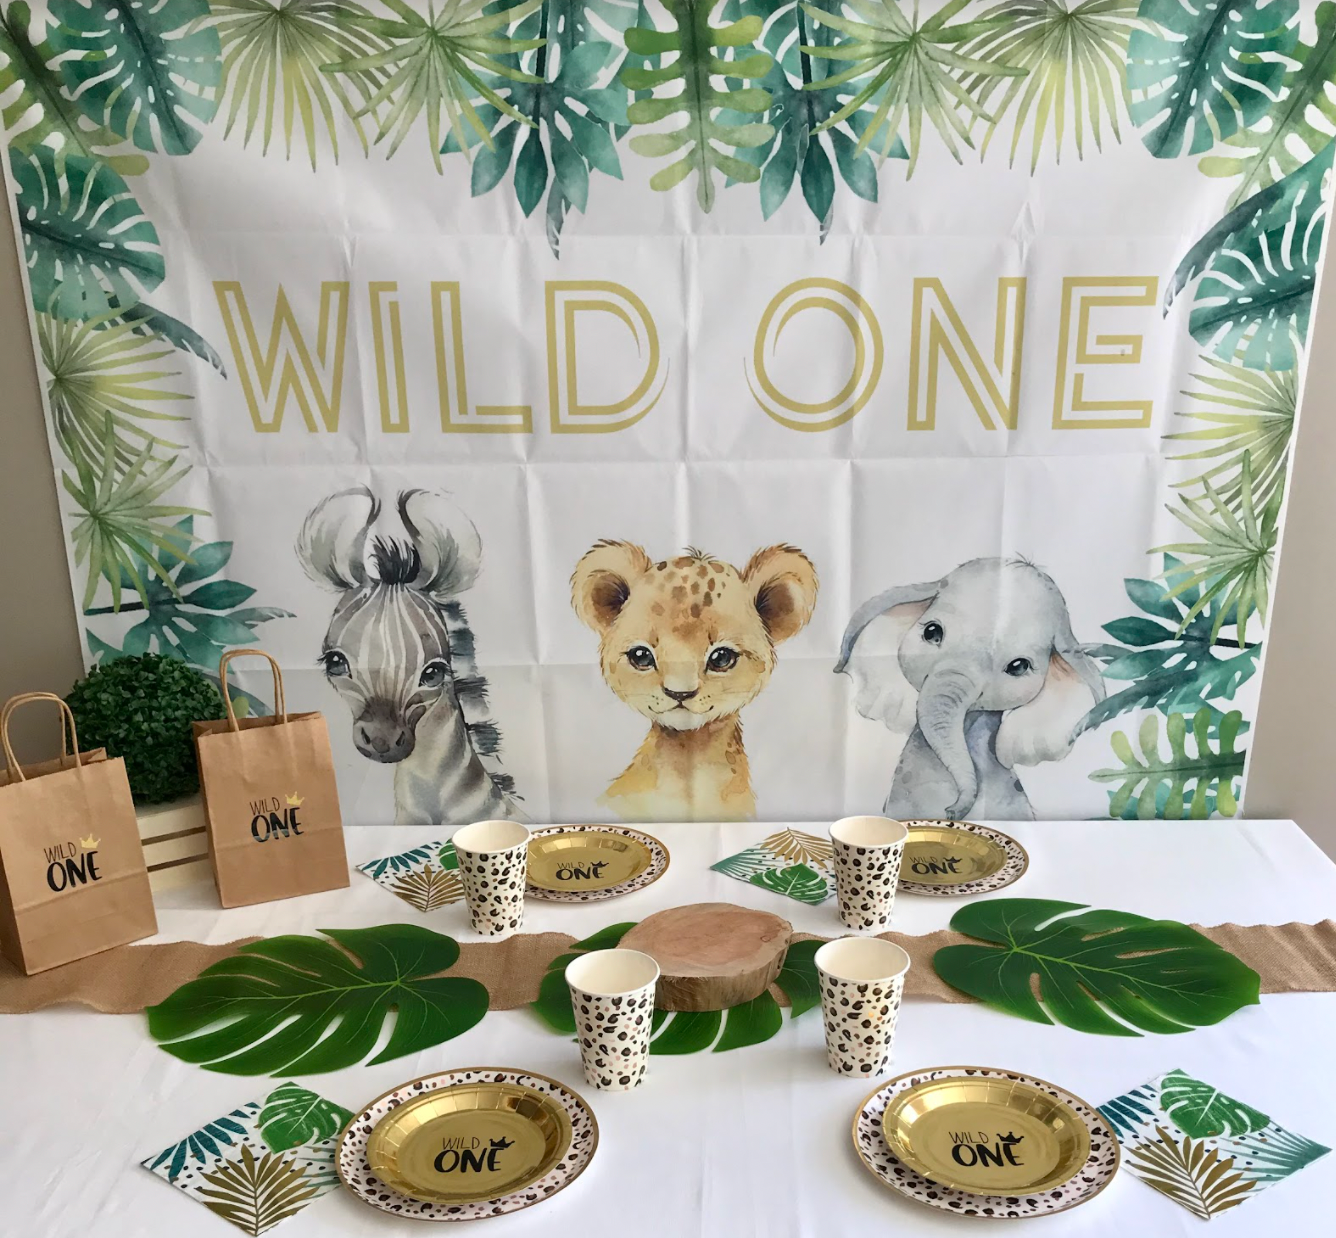 Wild one party box